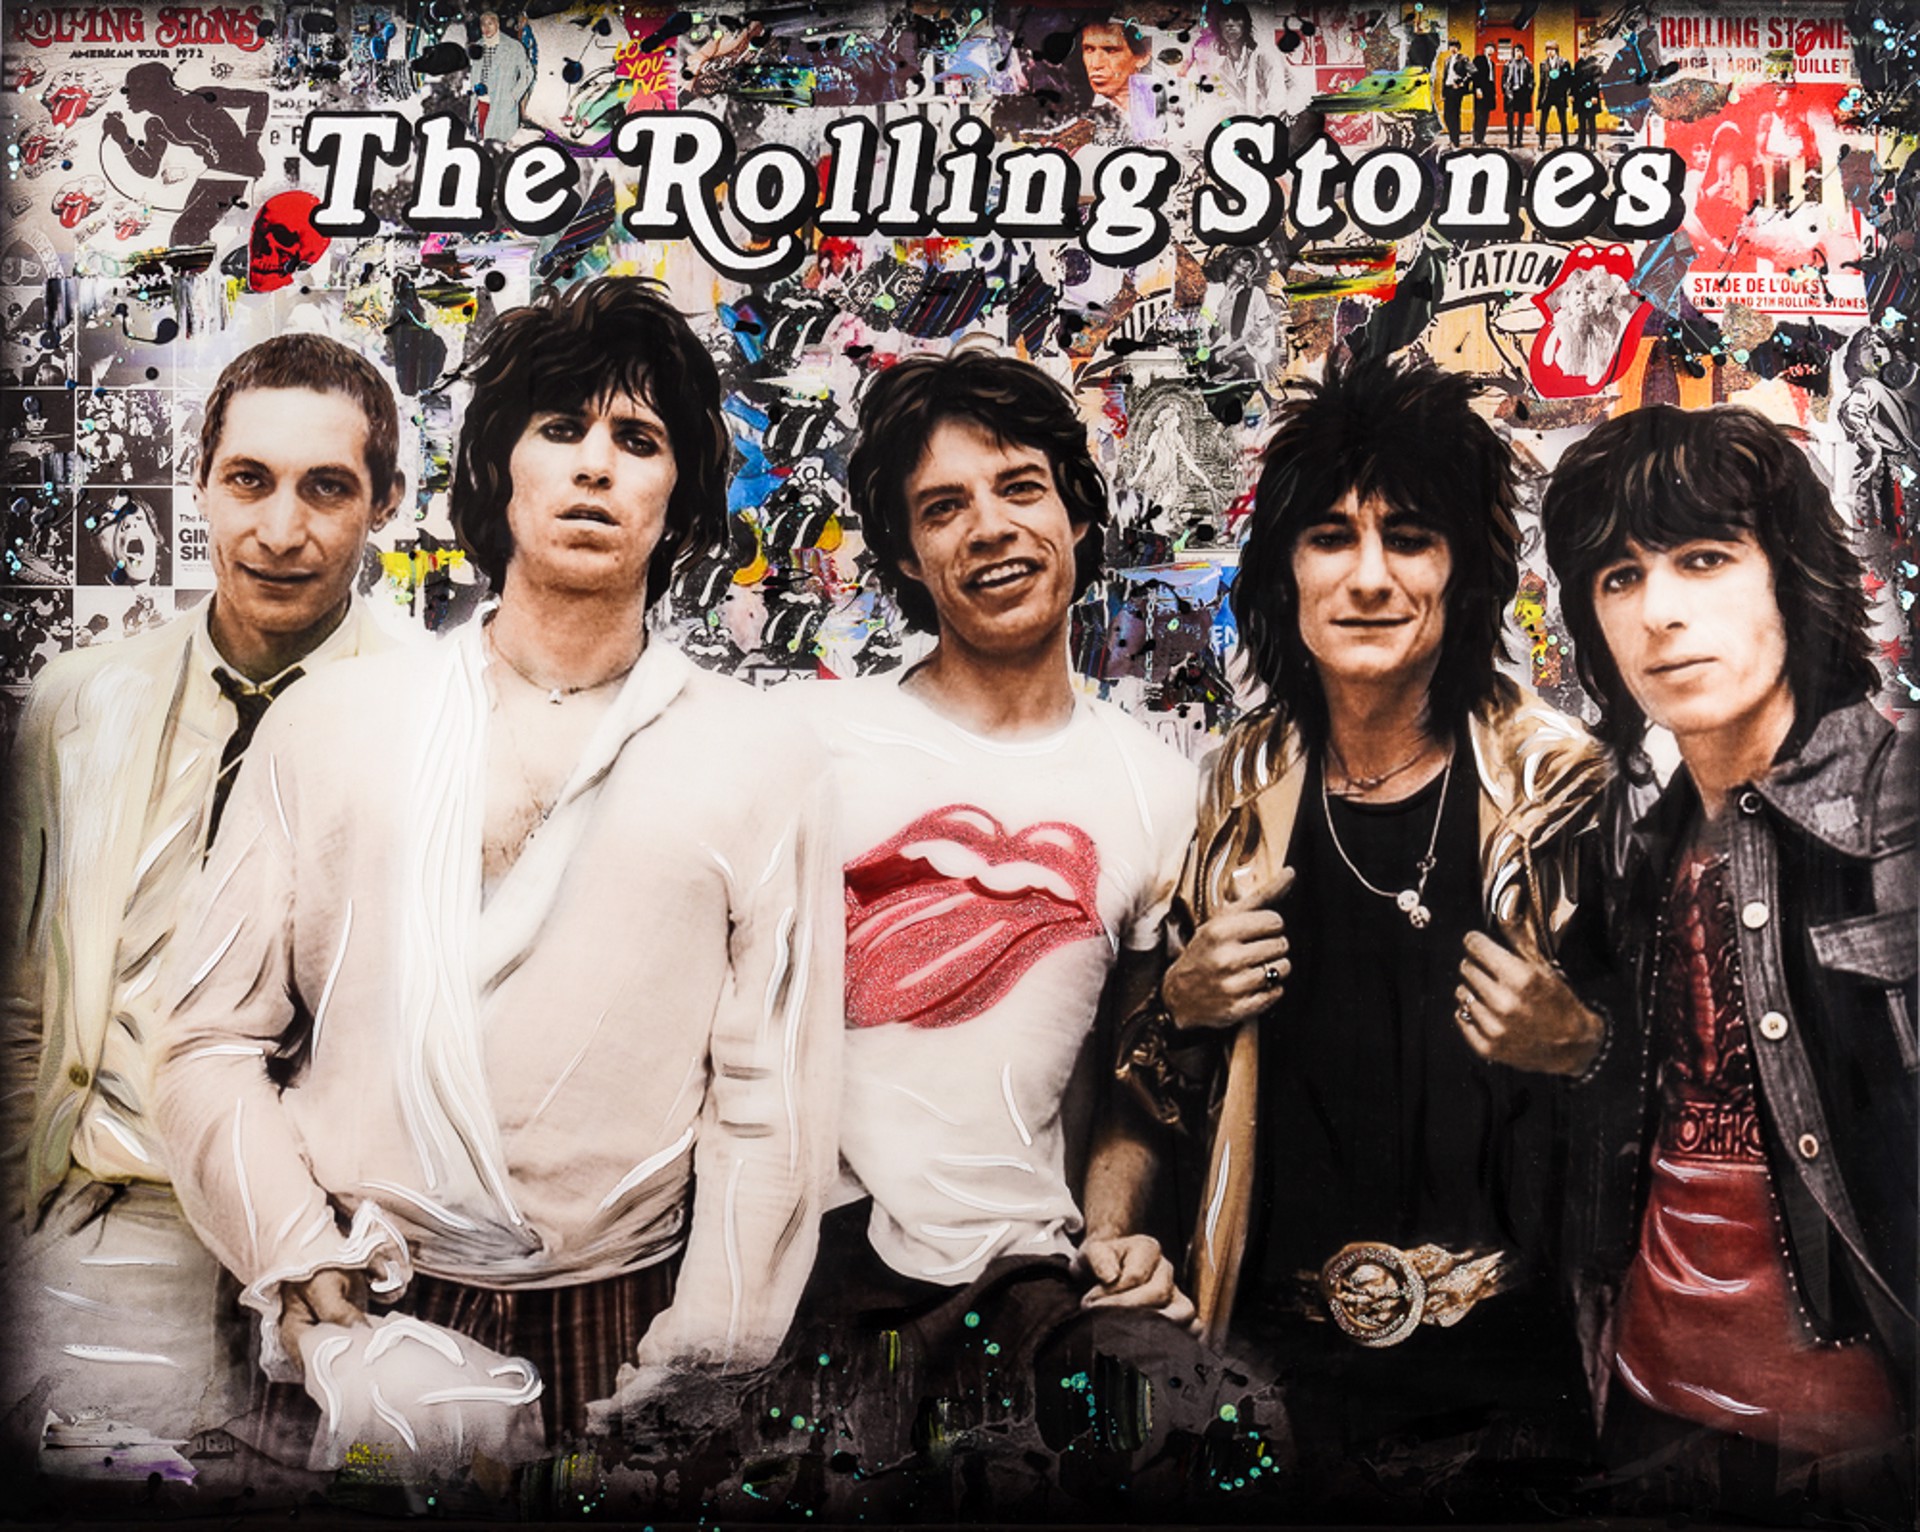 The Rolling Stones by De Von